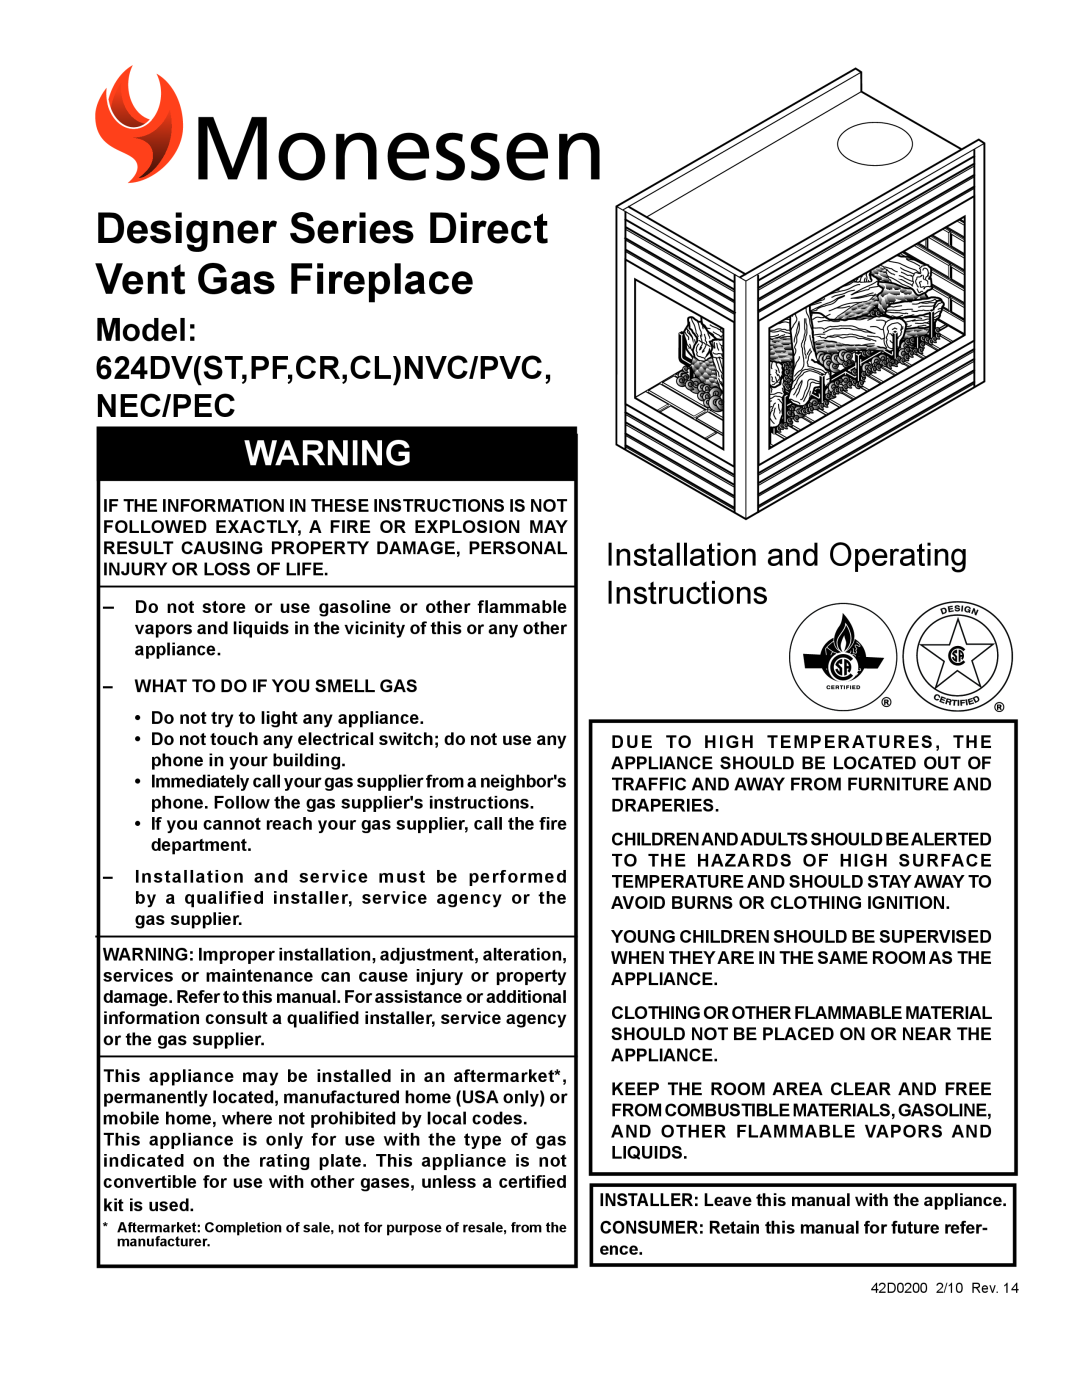 Monessen Hearth CL)NVC/PVC manual Model 624dvST,PF,CR,CLNVC/PVC NEC/PEC, Designer Series Direct Vent Gas Fireplace 